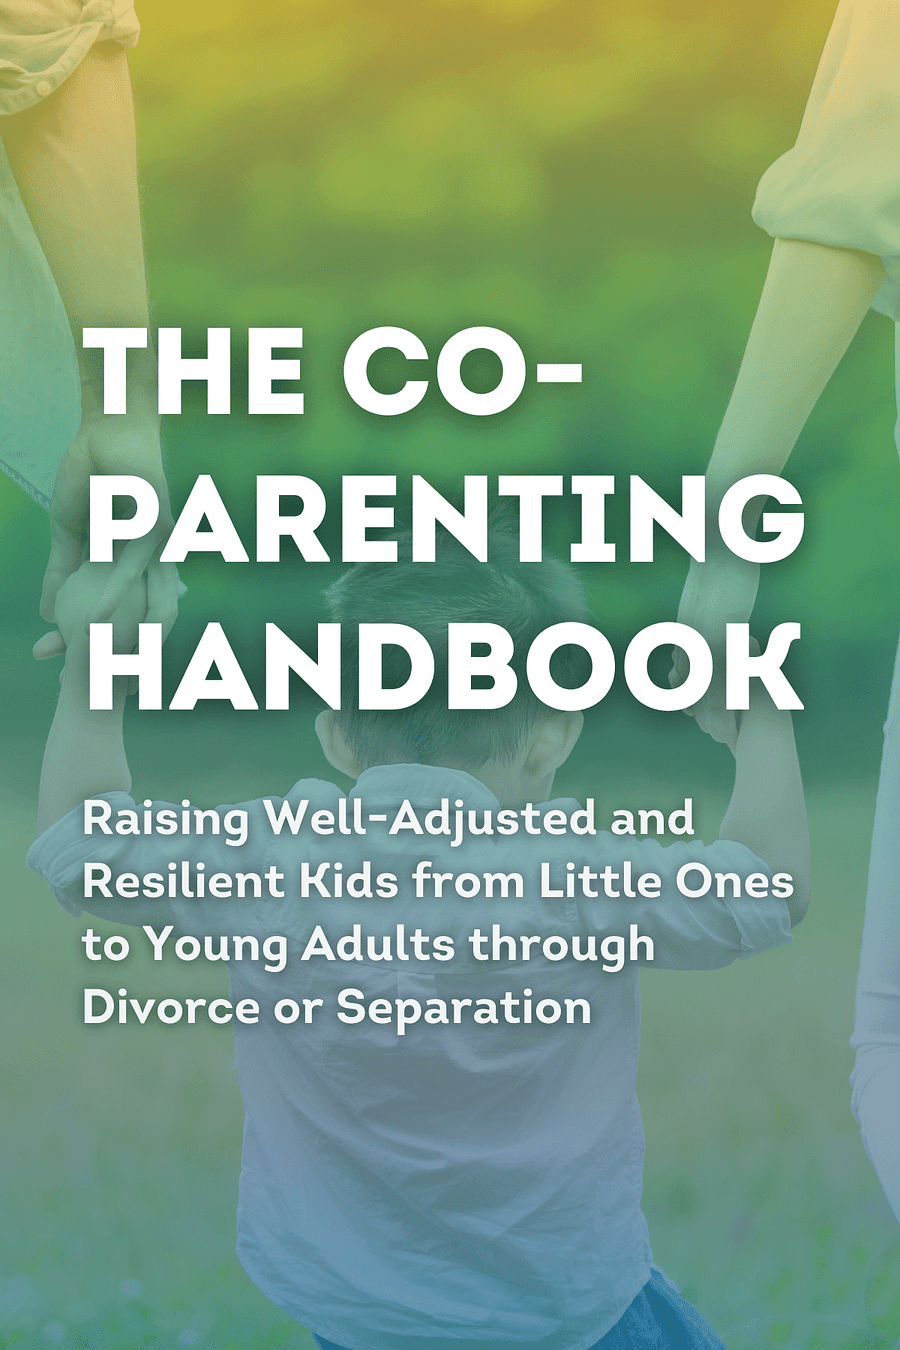 The Co-Parenting Handbook by Karen Bonnell - Book Summary